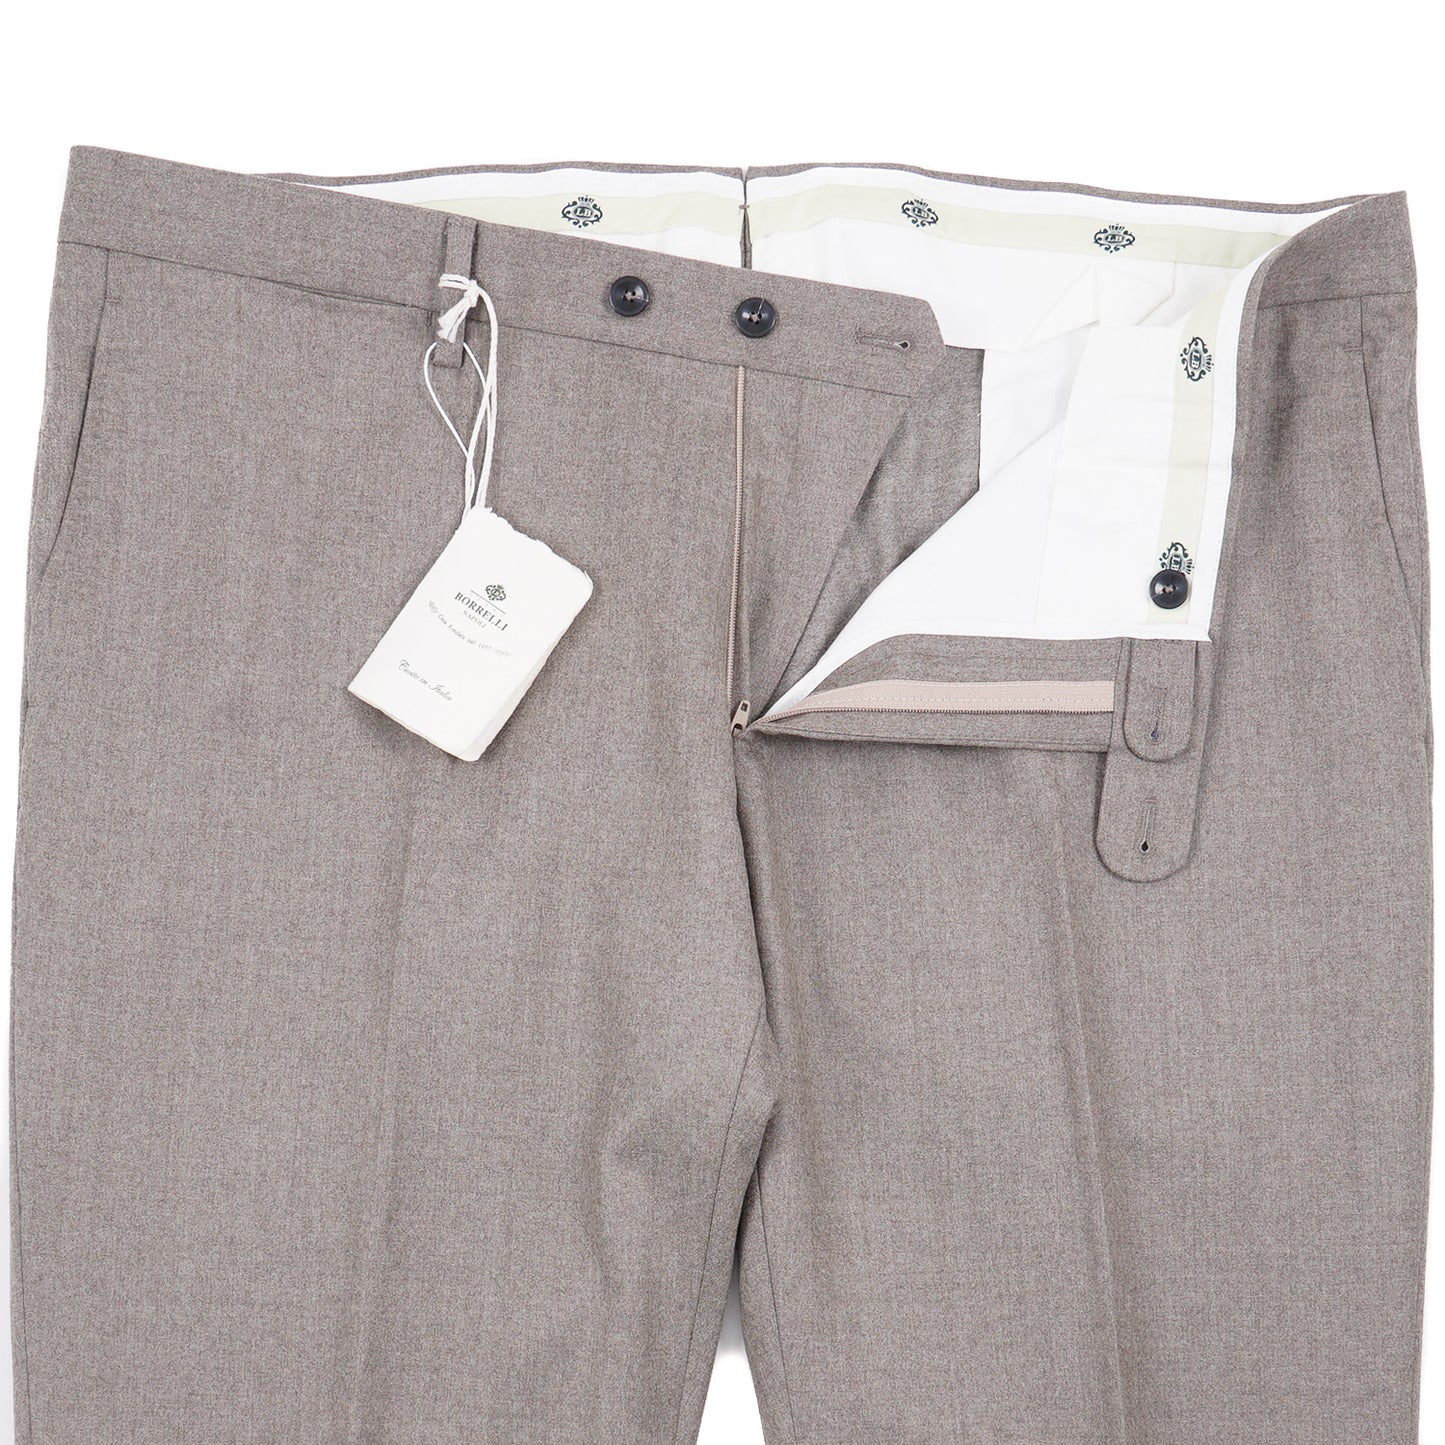 Luigi Borrelli Flannel Wool Dress Pants - Top Shelf Apparel